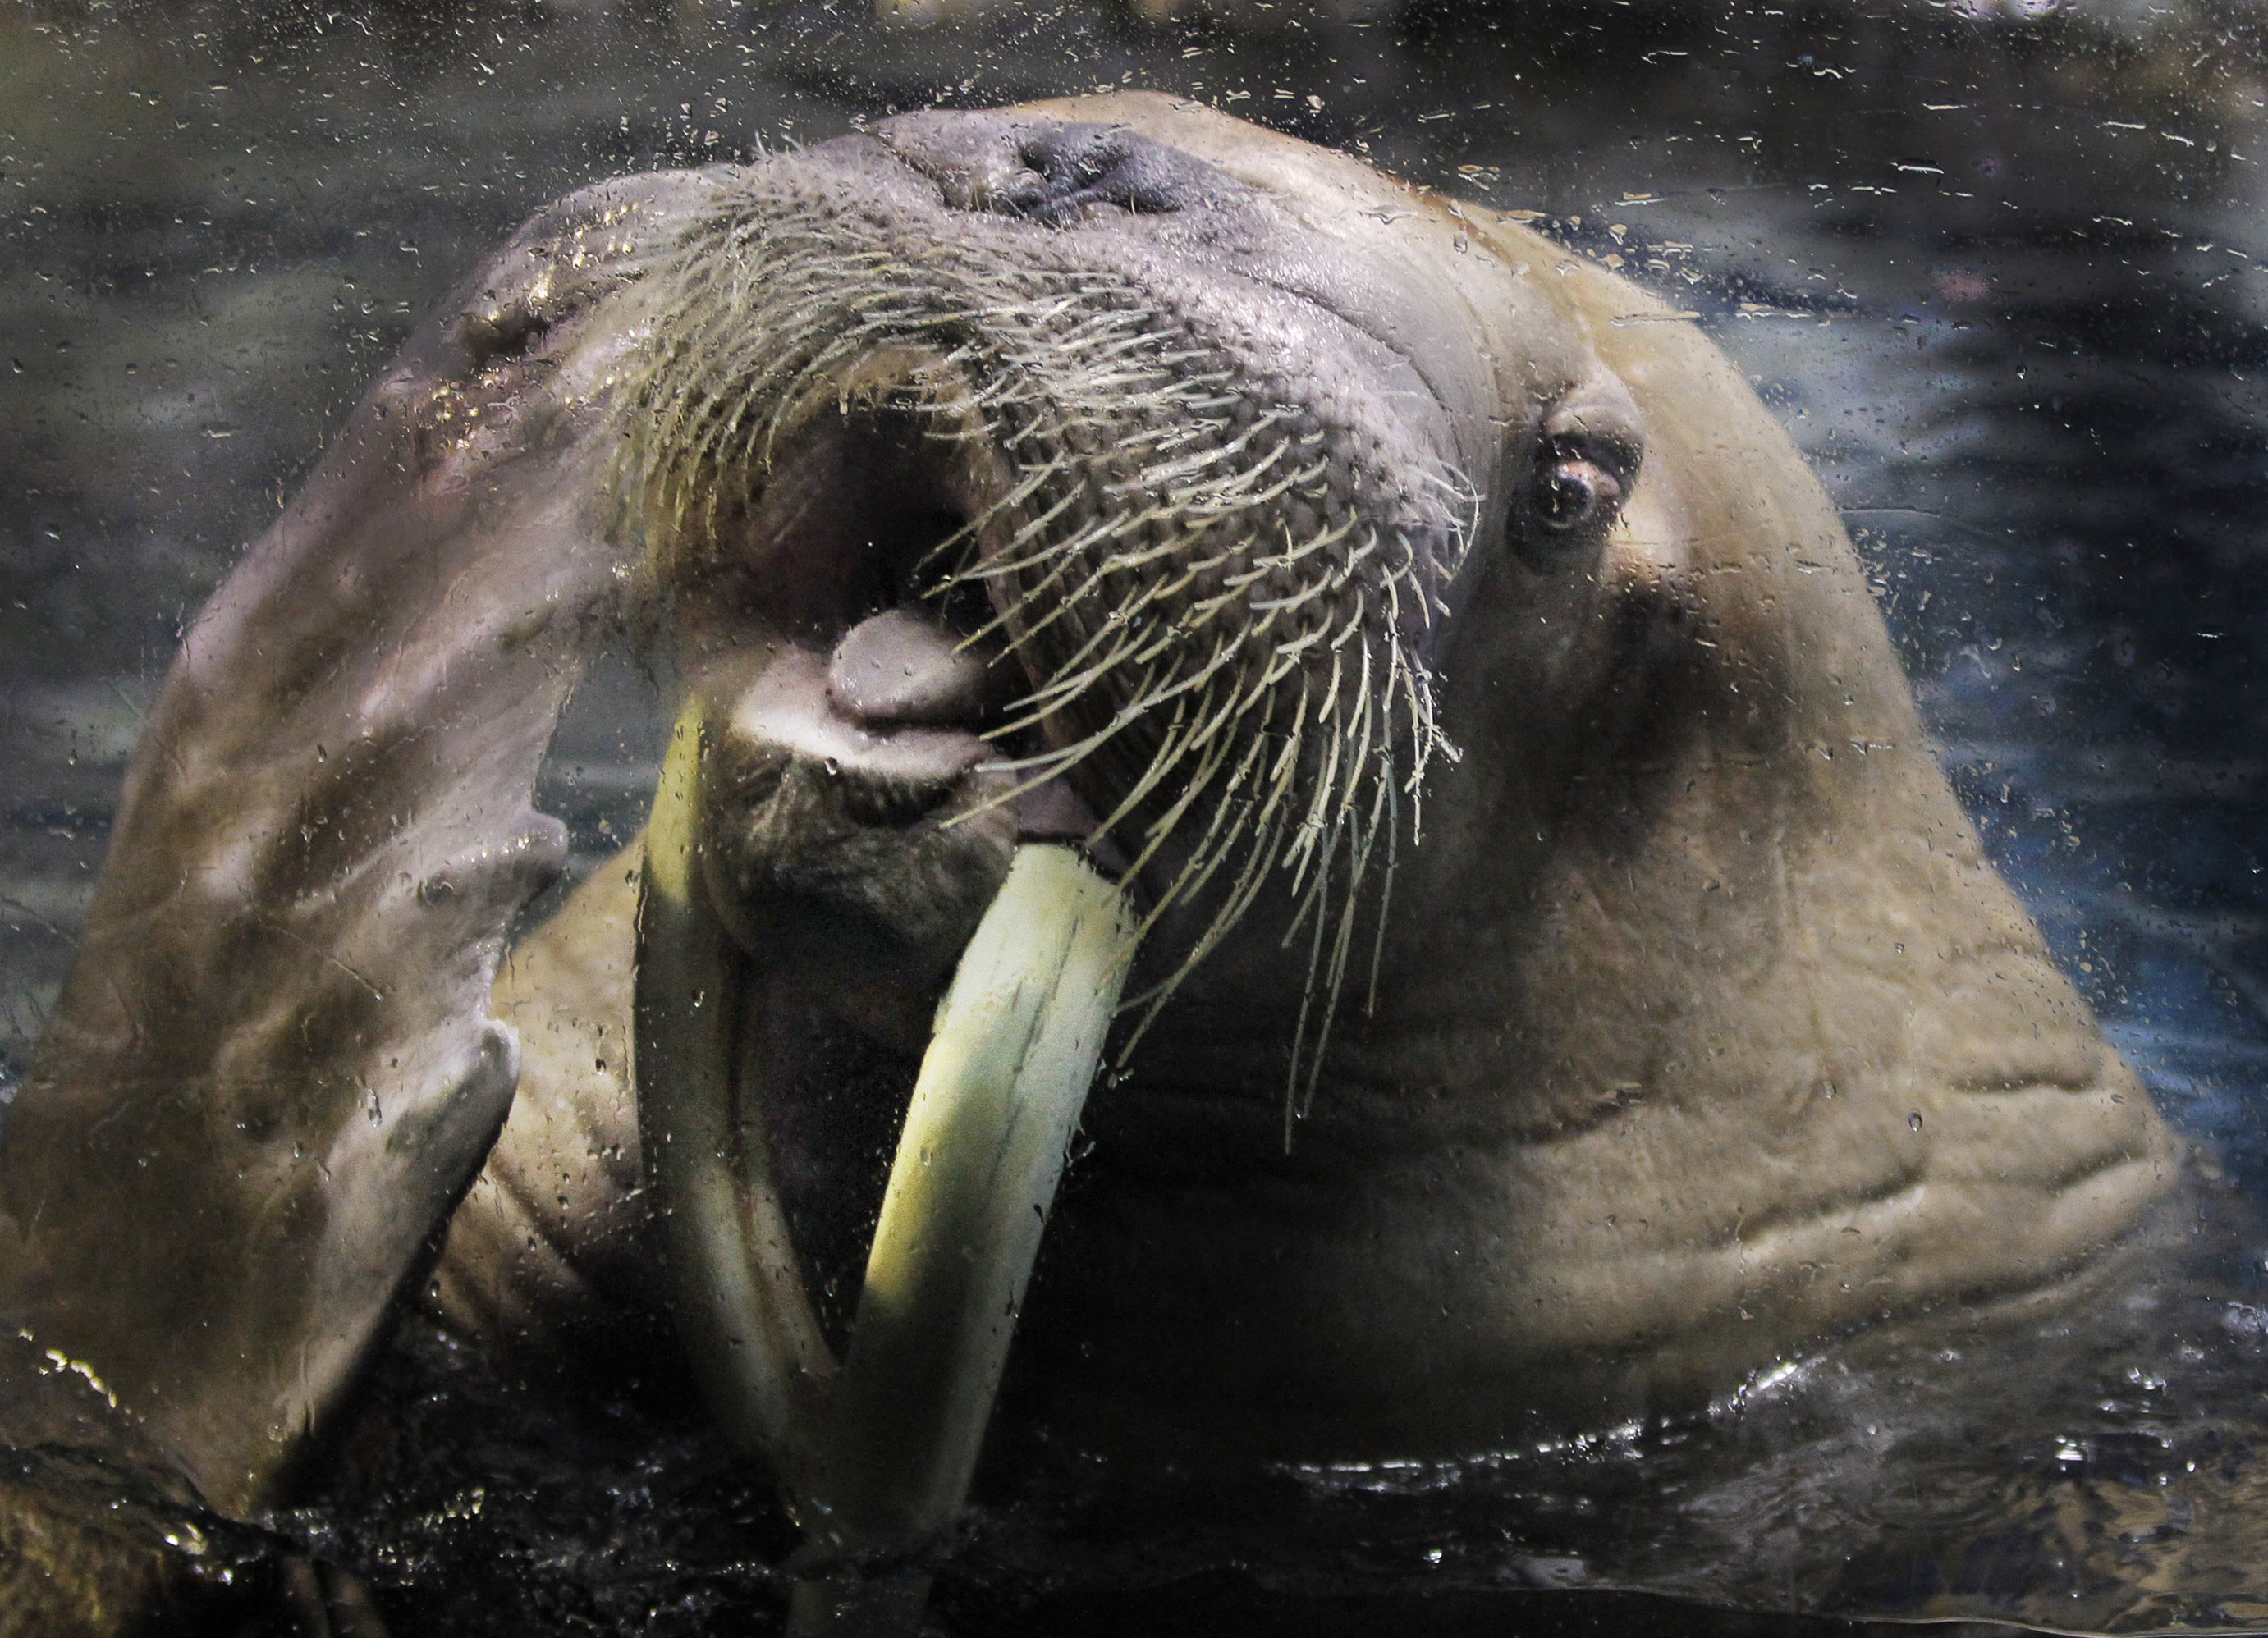 Netflix 'Our Planet' hit on climate change walrus cliff-diving claim -  Washington Times